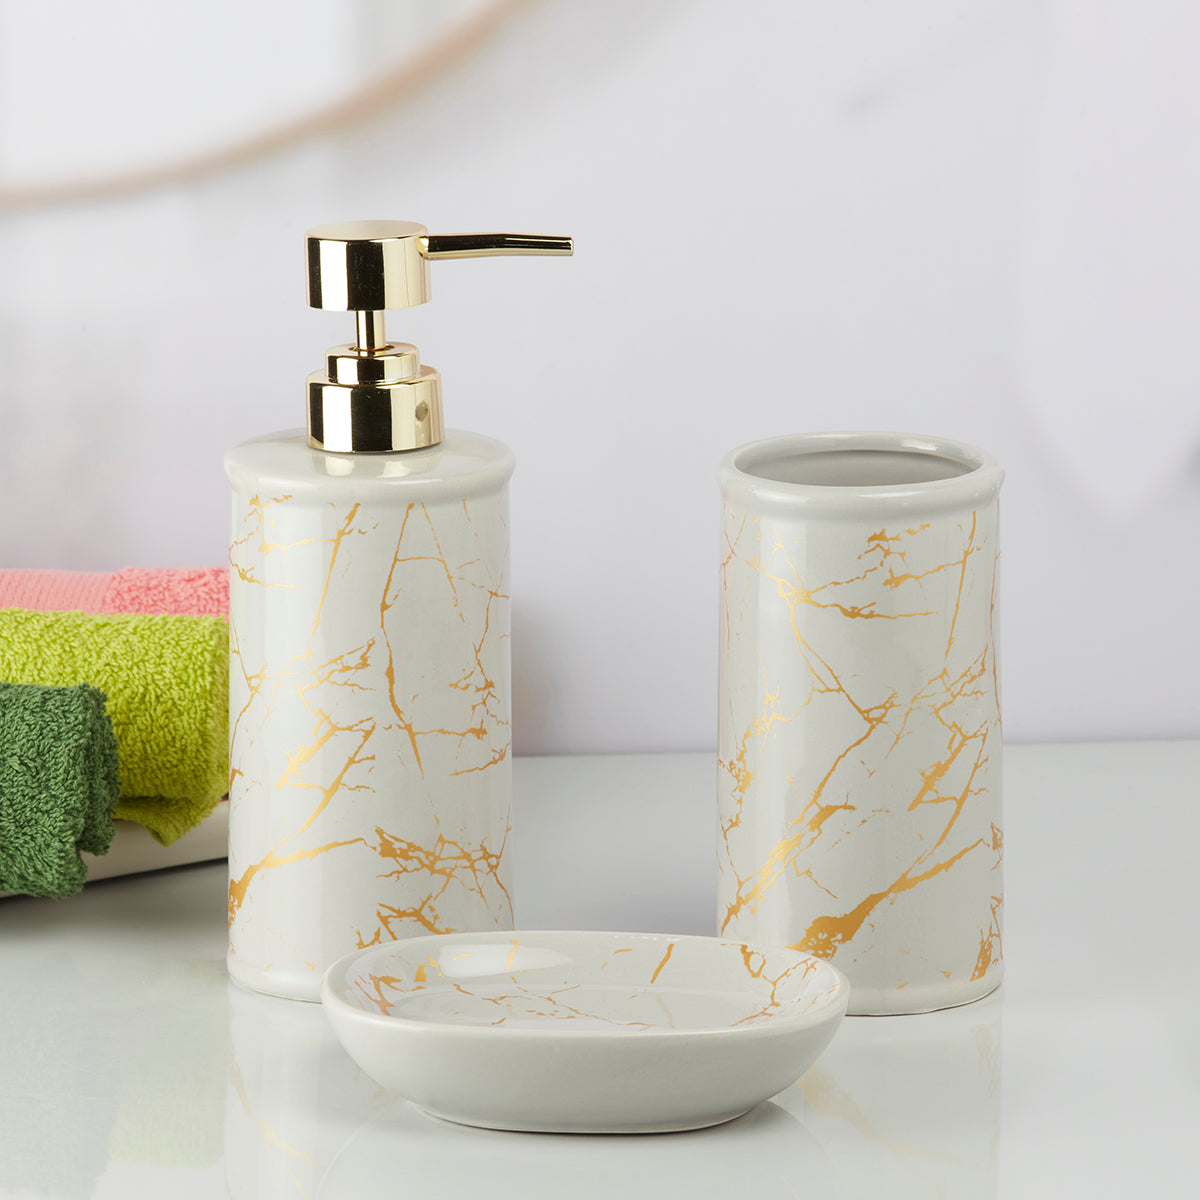 Ceramic Bathroom Accessories Set of 3 Bath Set with Soap Dispenser (9731)